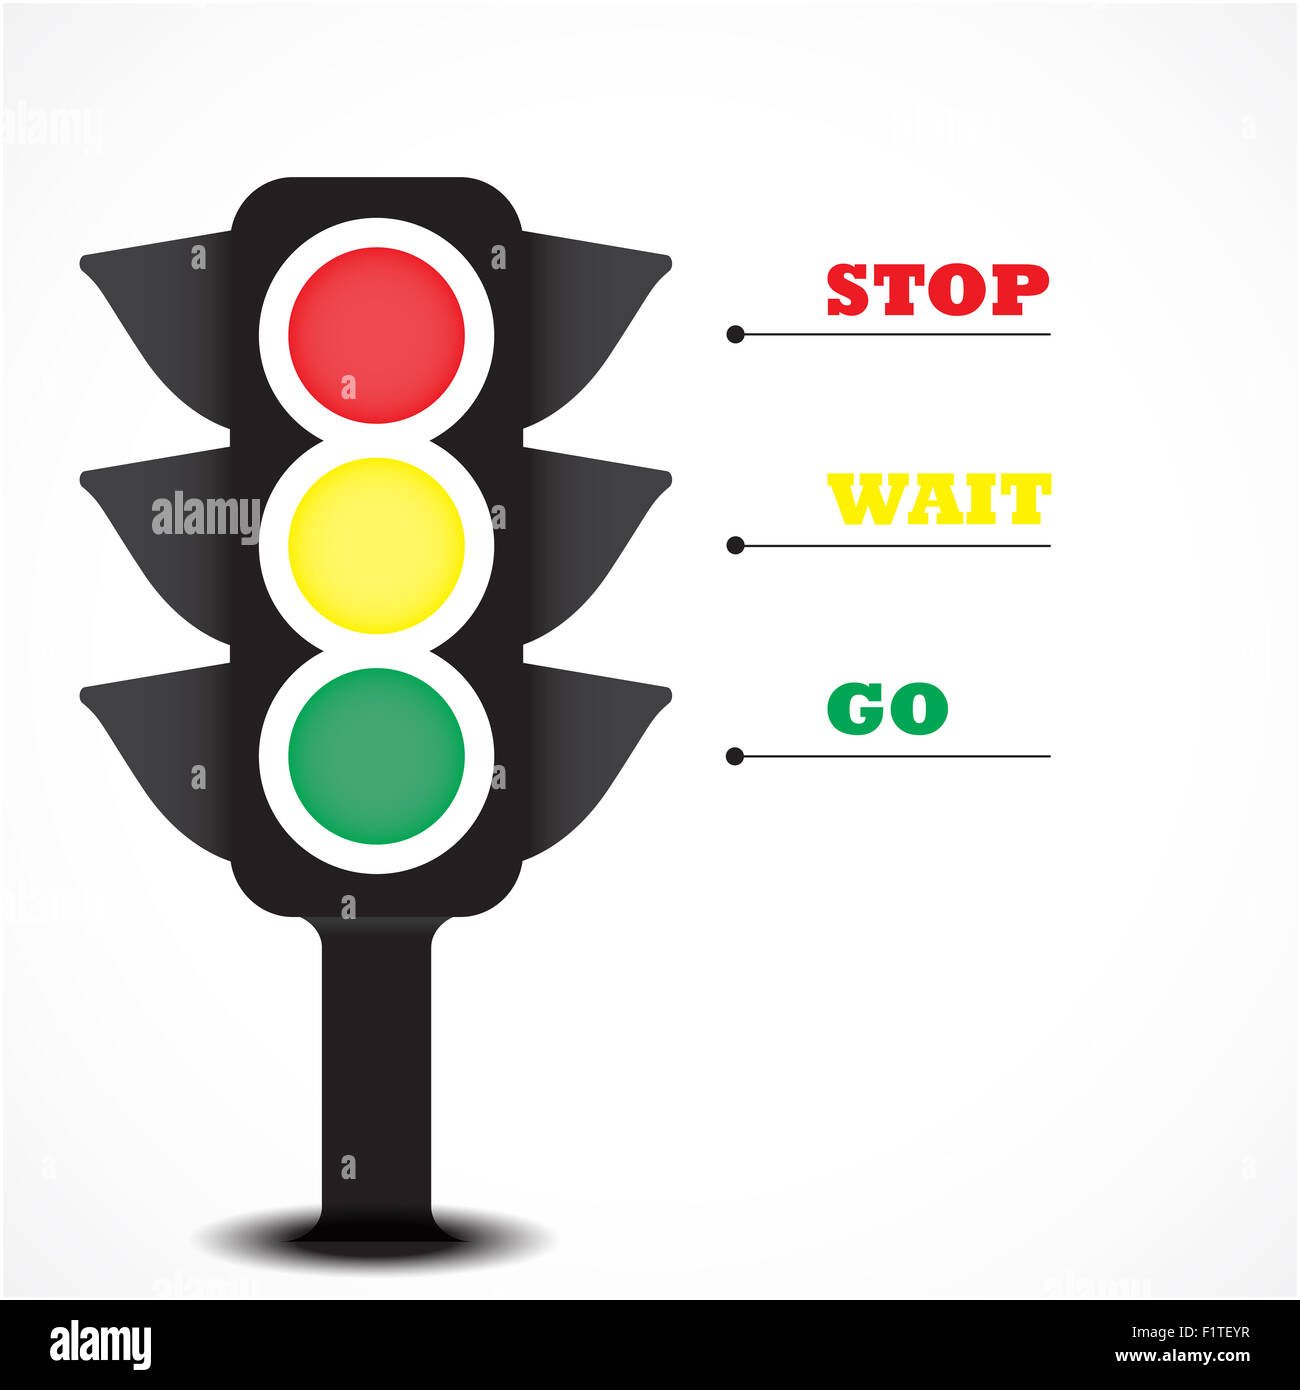 Traffic light symbol Stock Photo - Alamy